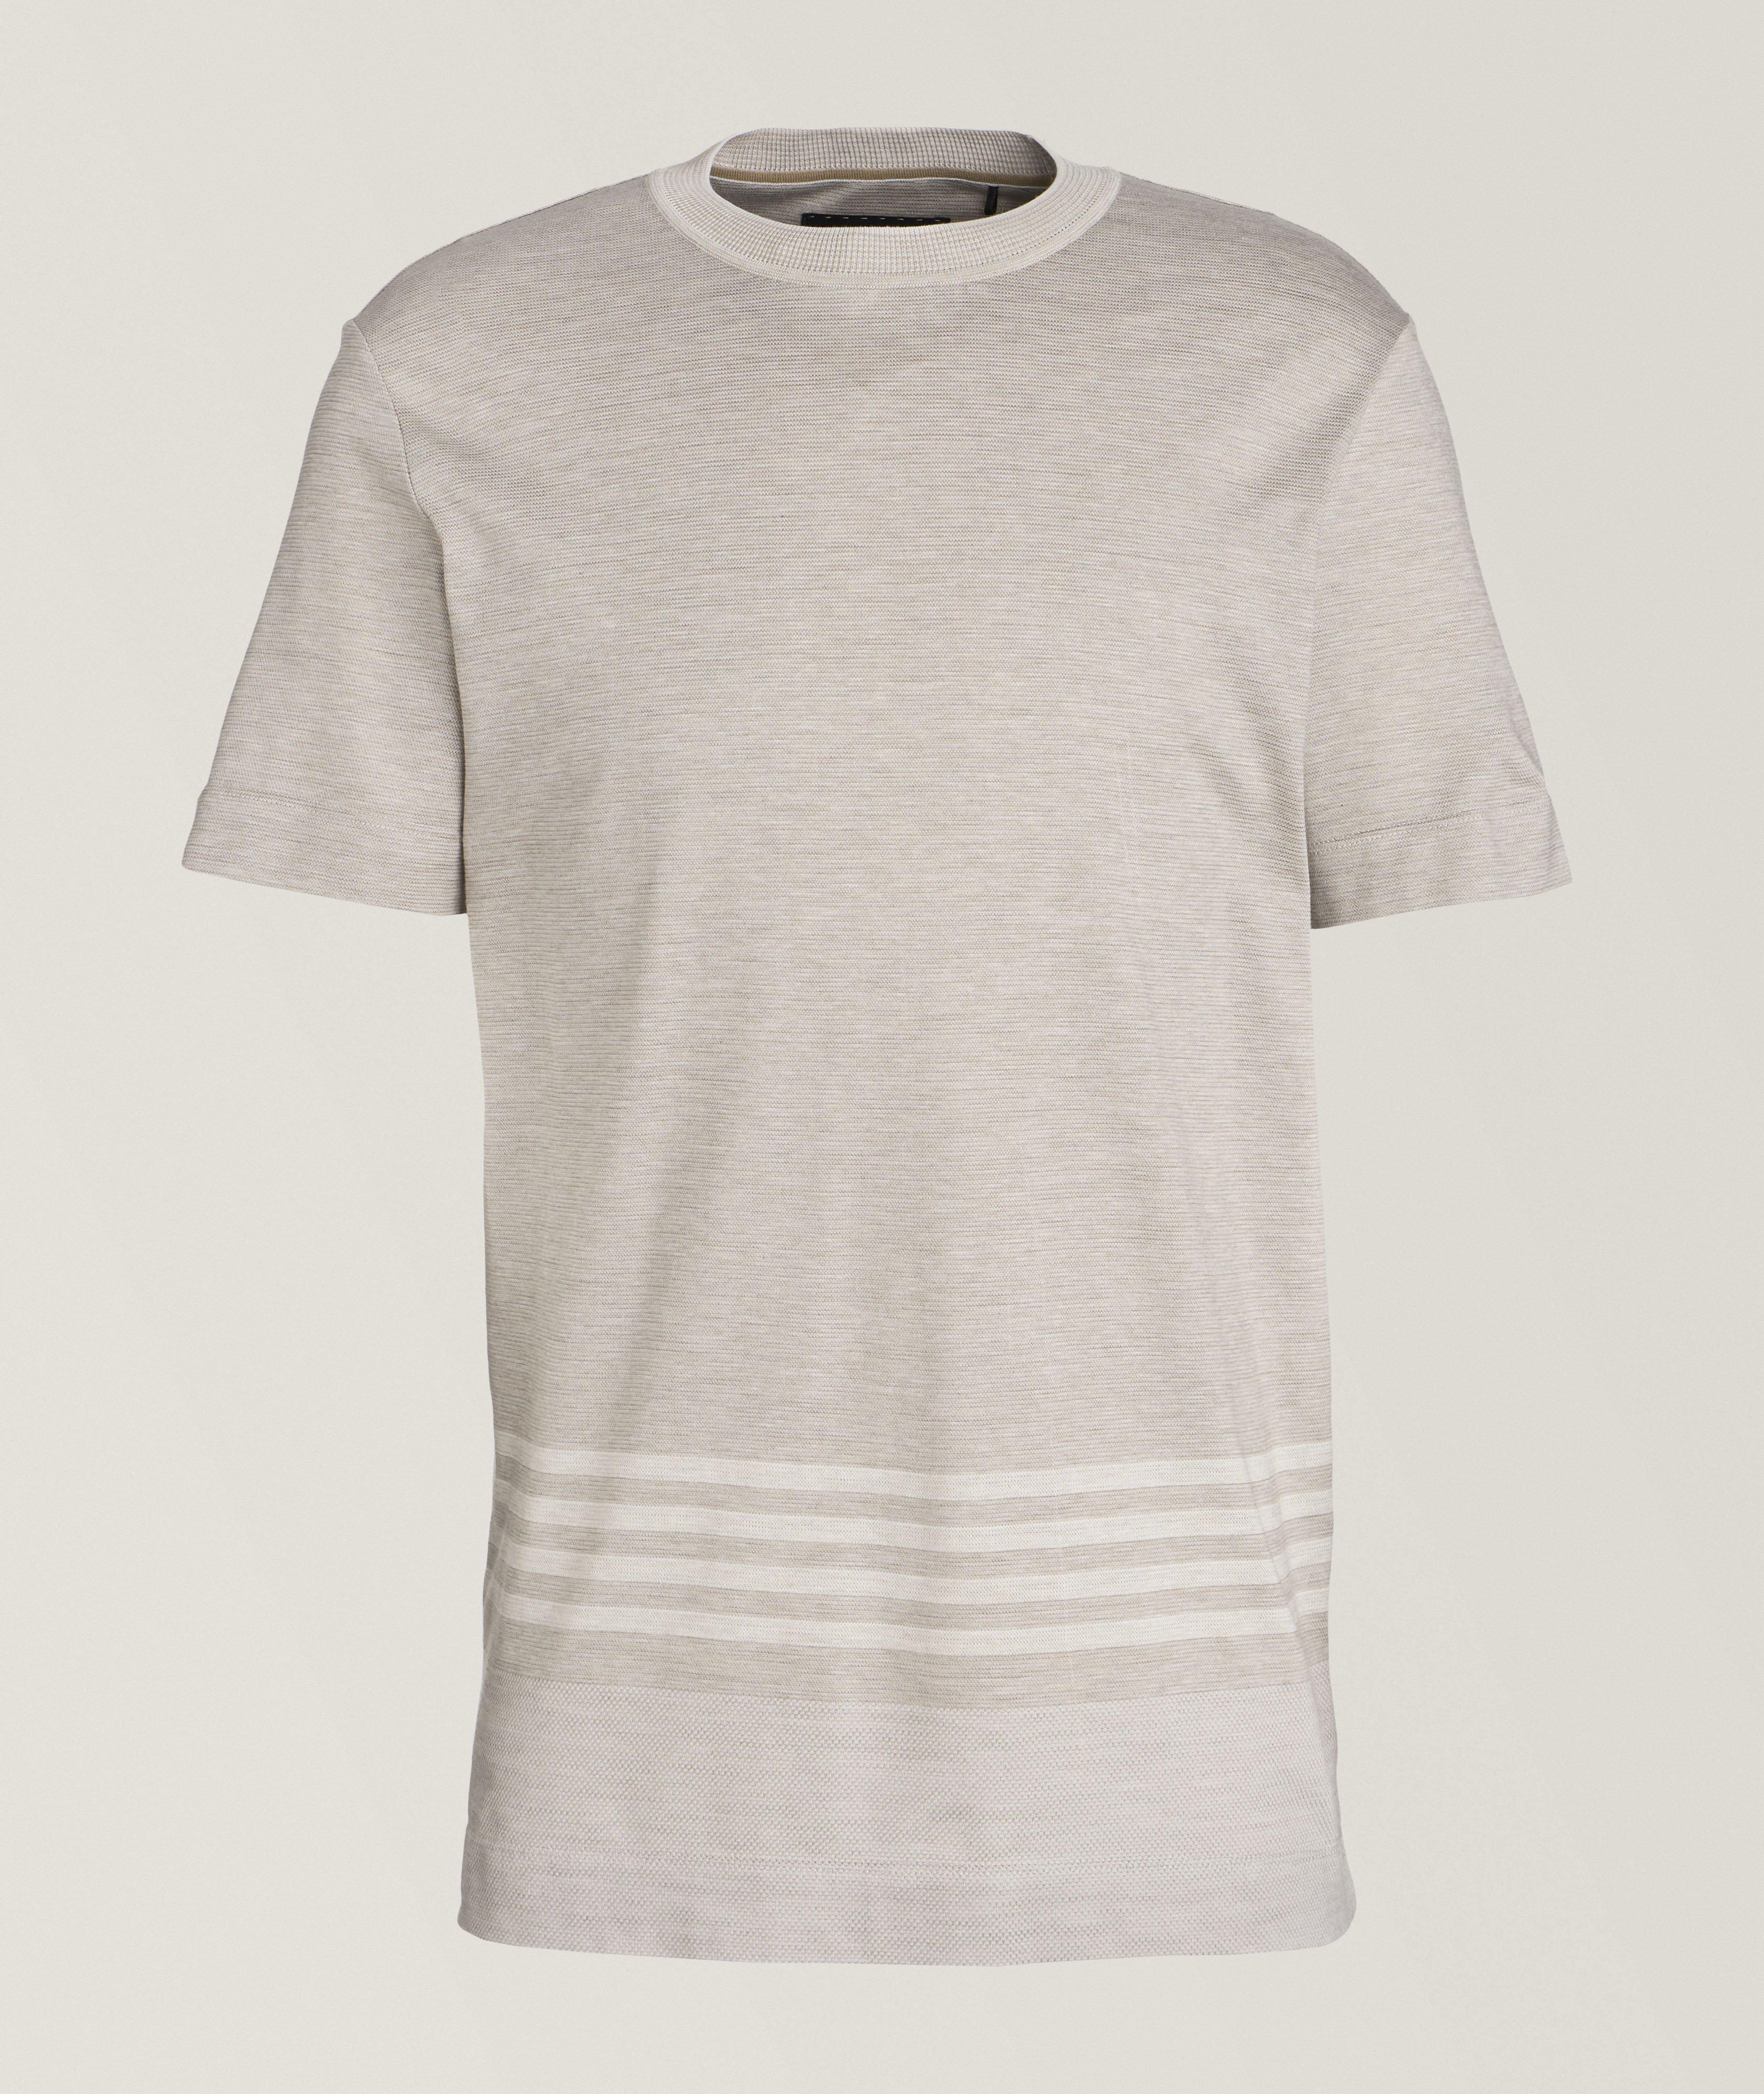 Cotton-Silk Knit T-Shirt image 0